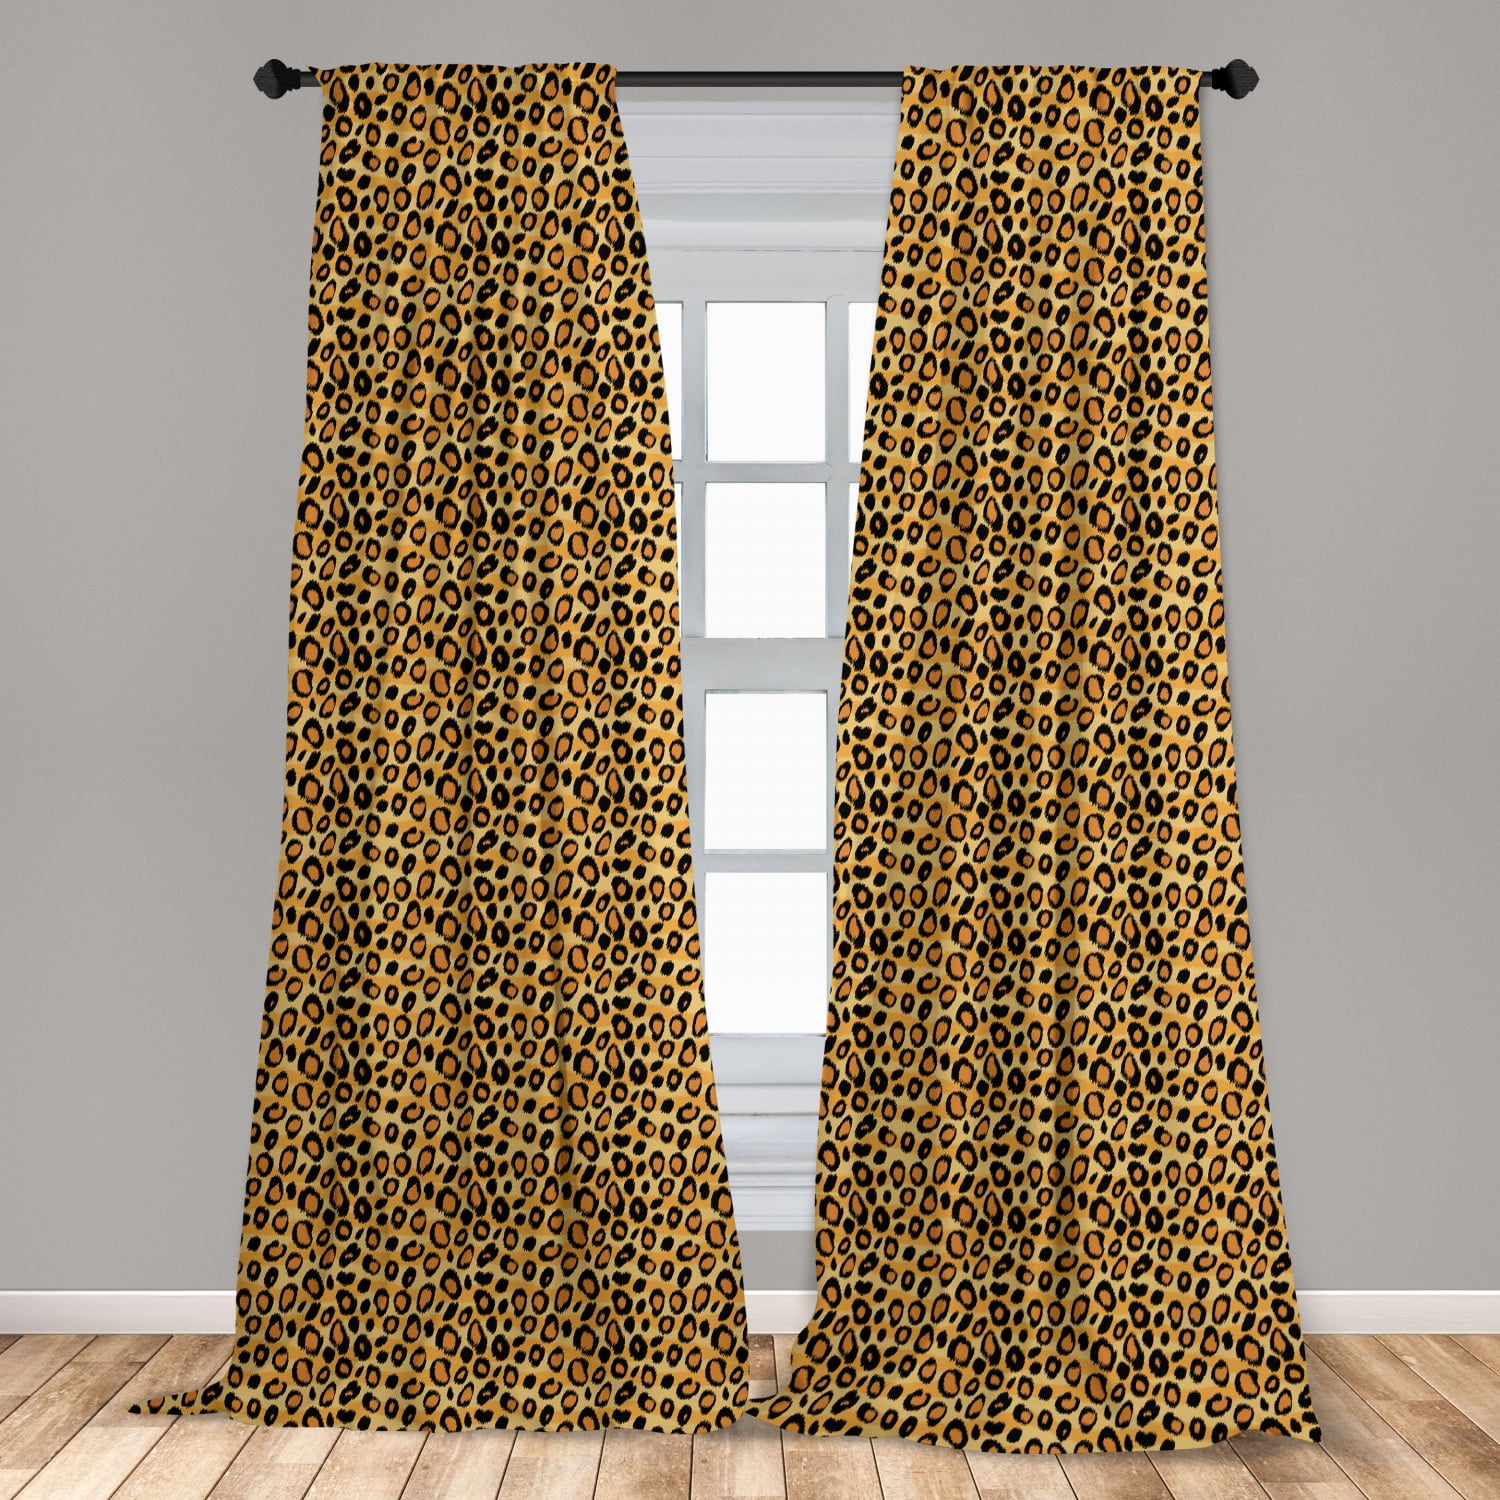 Shower curtain animal print fabric wild patch   zambia 